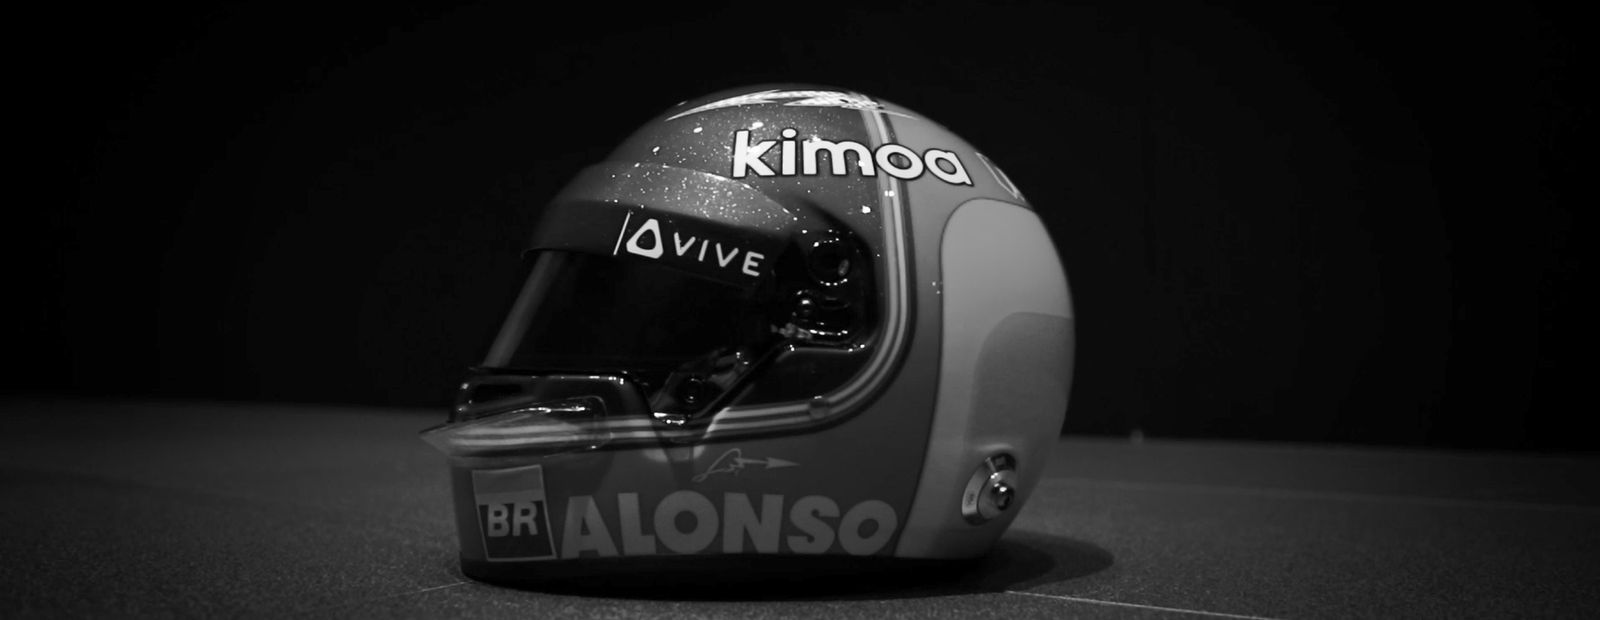 Fernando Alonso Helmet Poster - McLaren F1